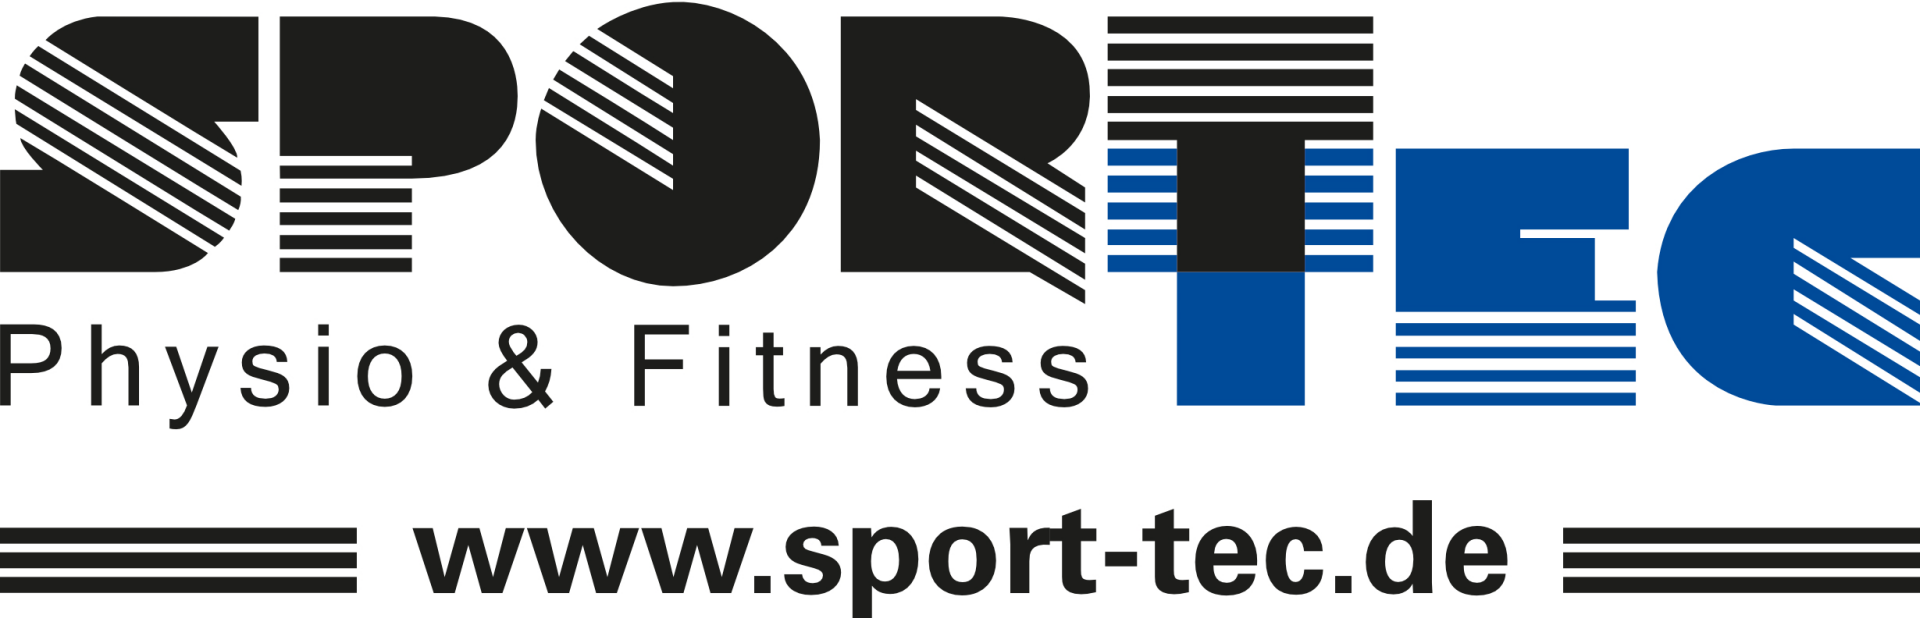 Sport-Tec GmbH
Physio & Fitness